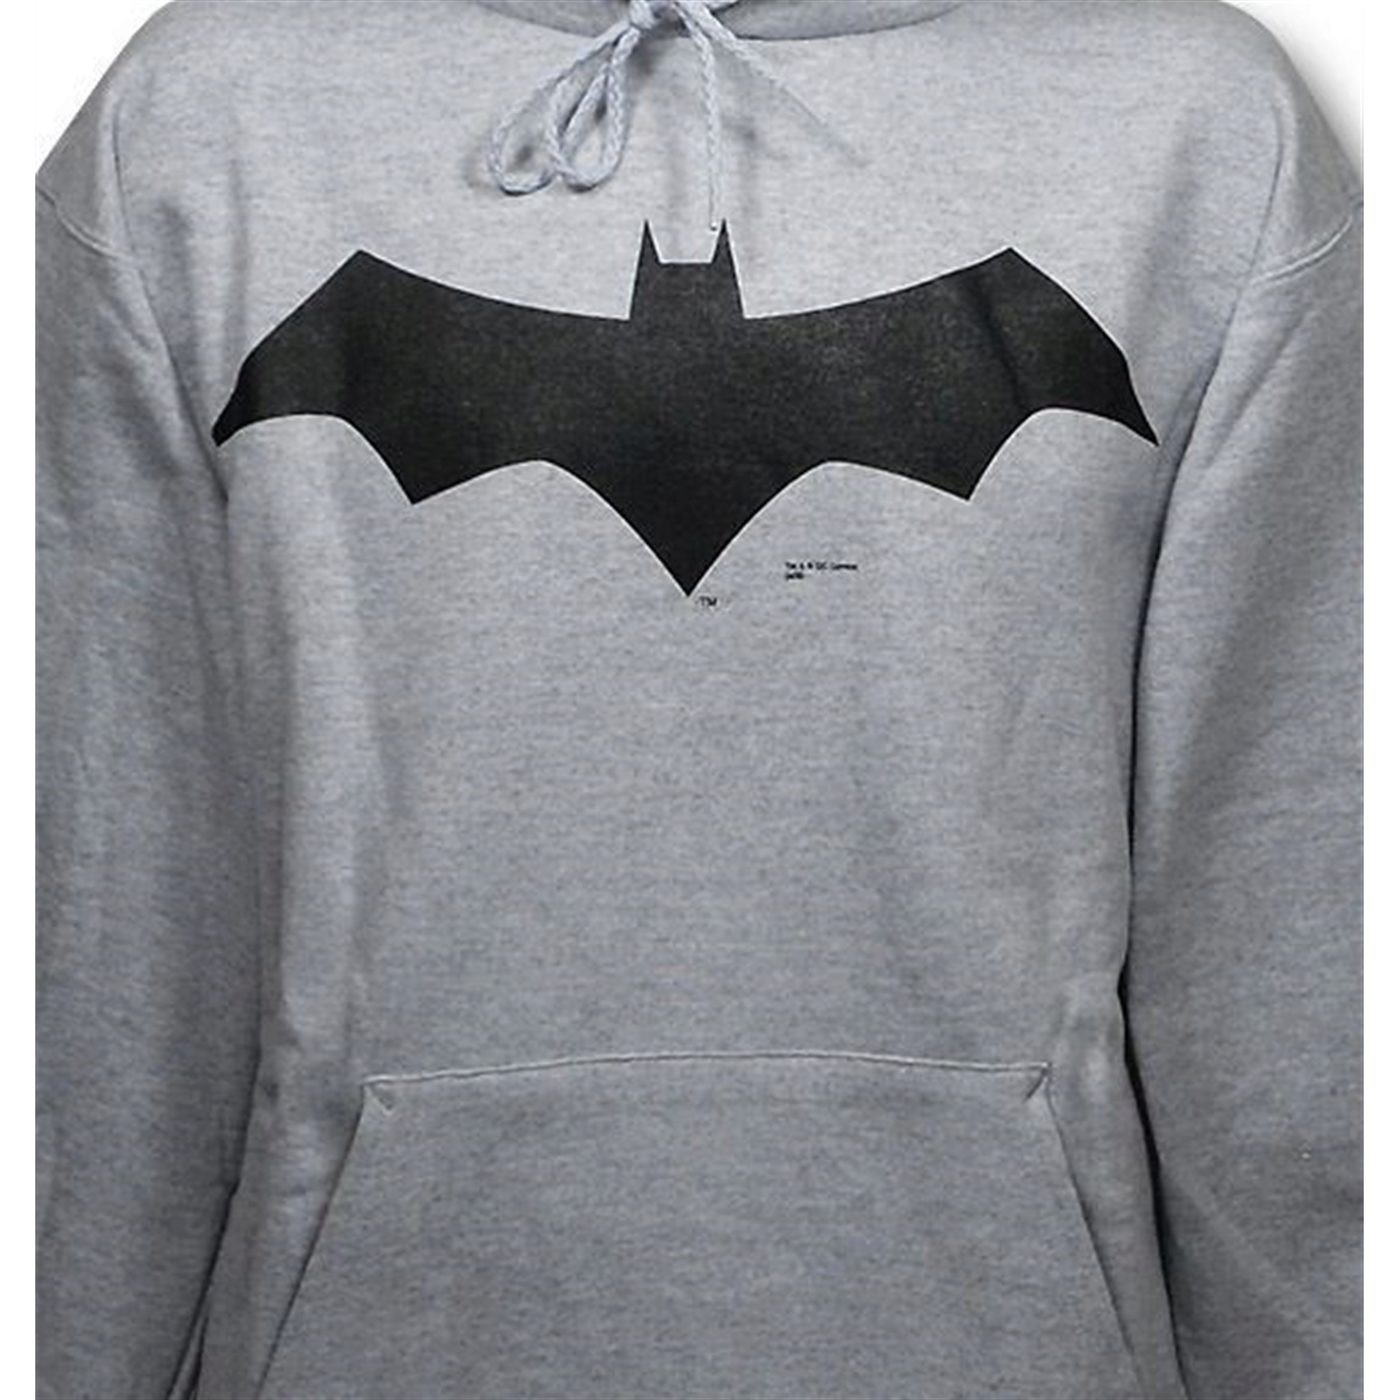 Batman Classic Symbol Hoodie / Sweatshirt